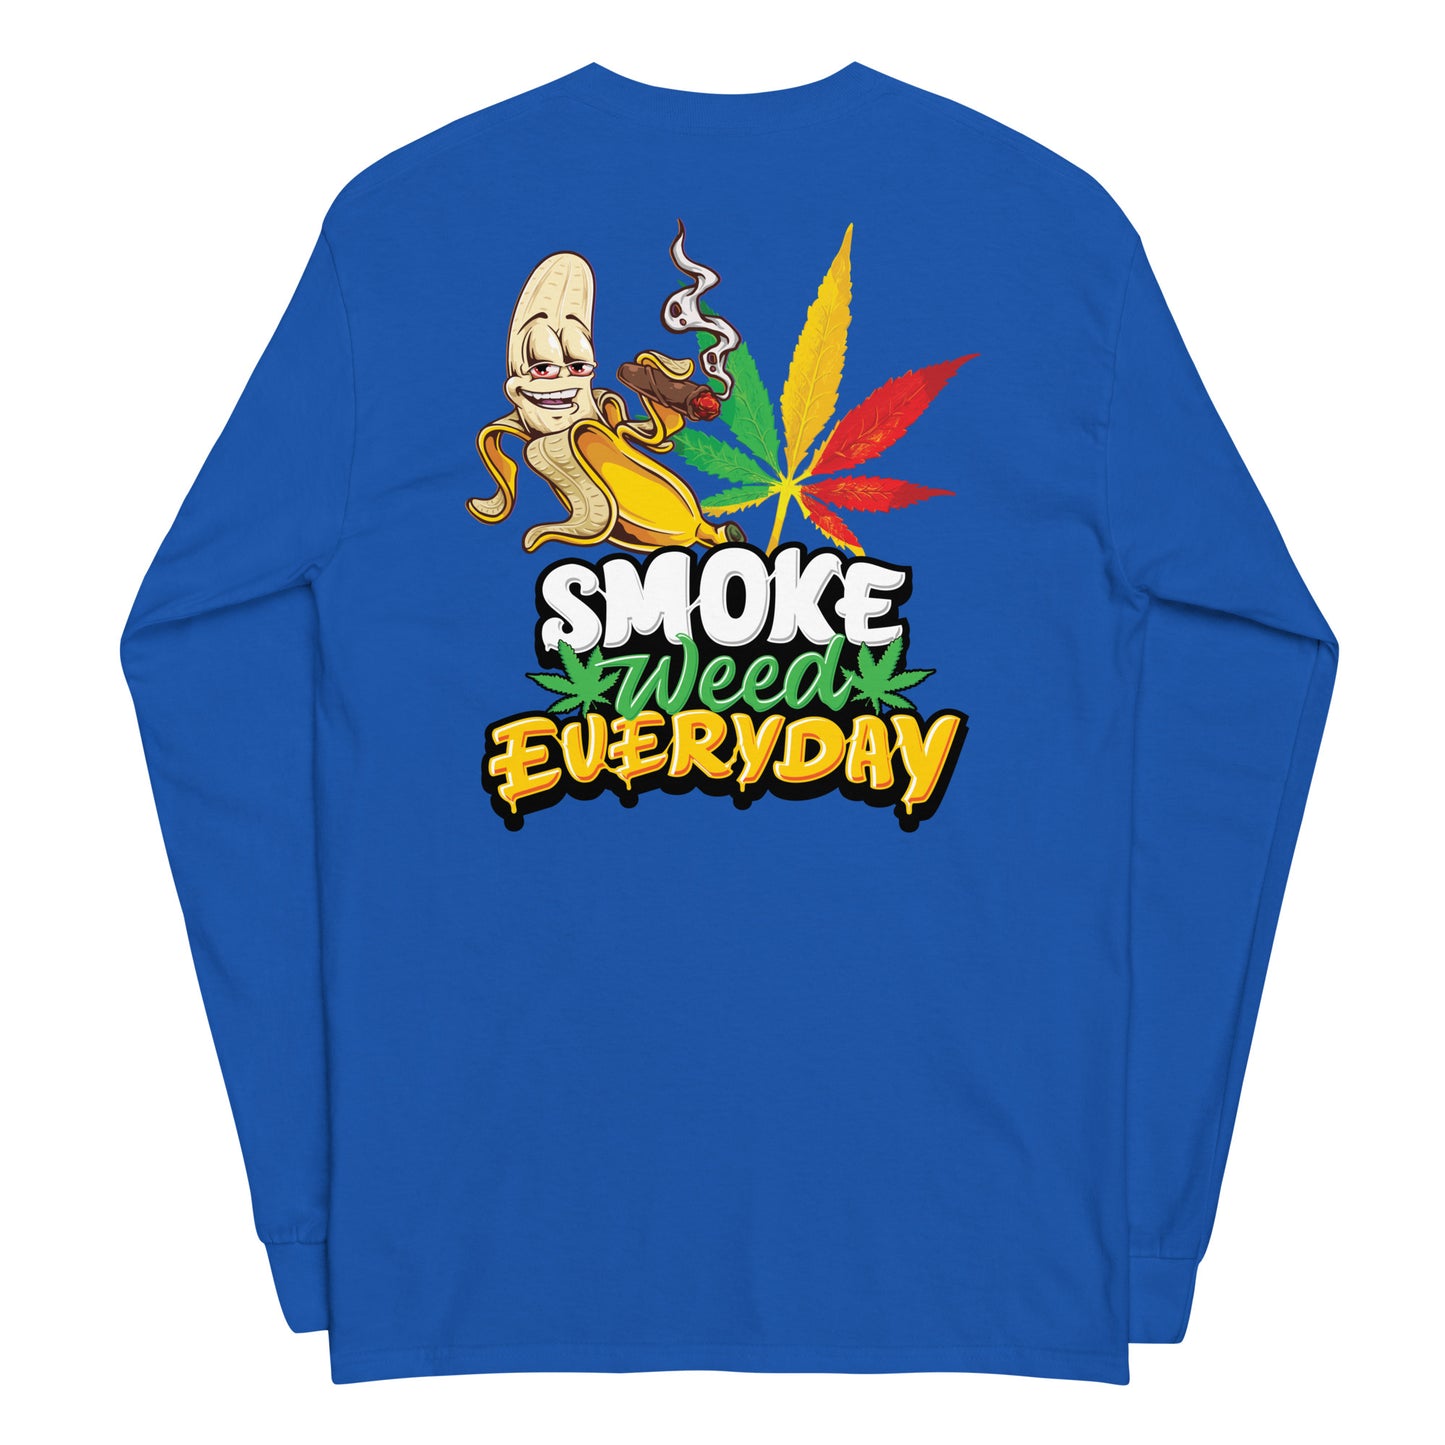 Smoke Everyday Long Sleeve Shirt